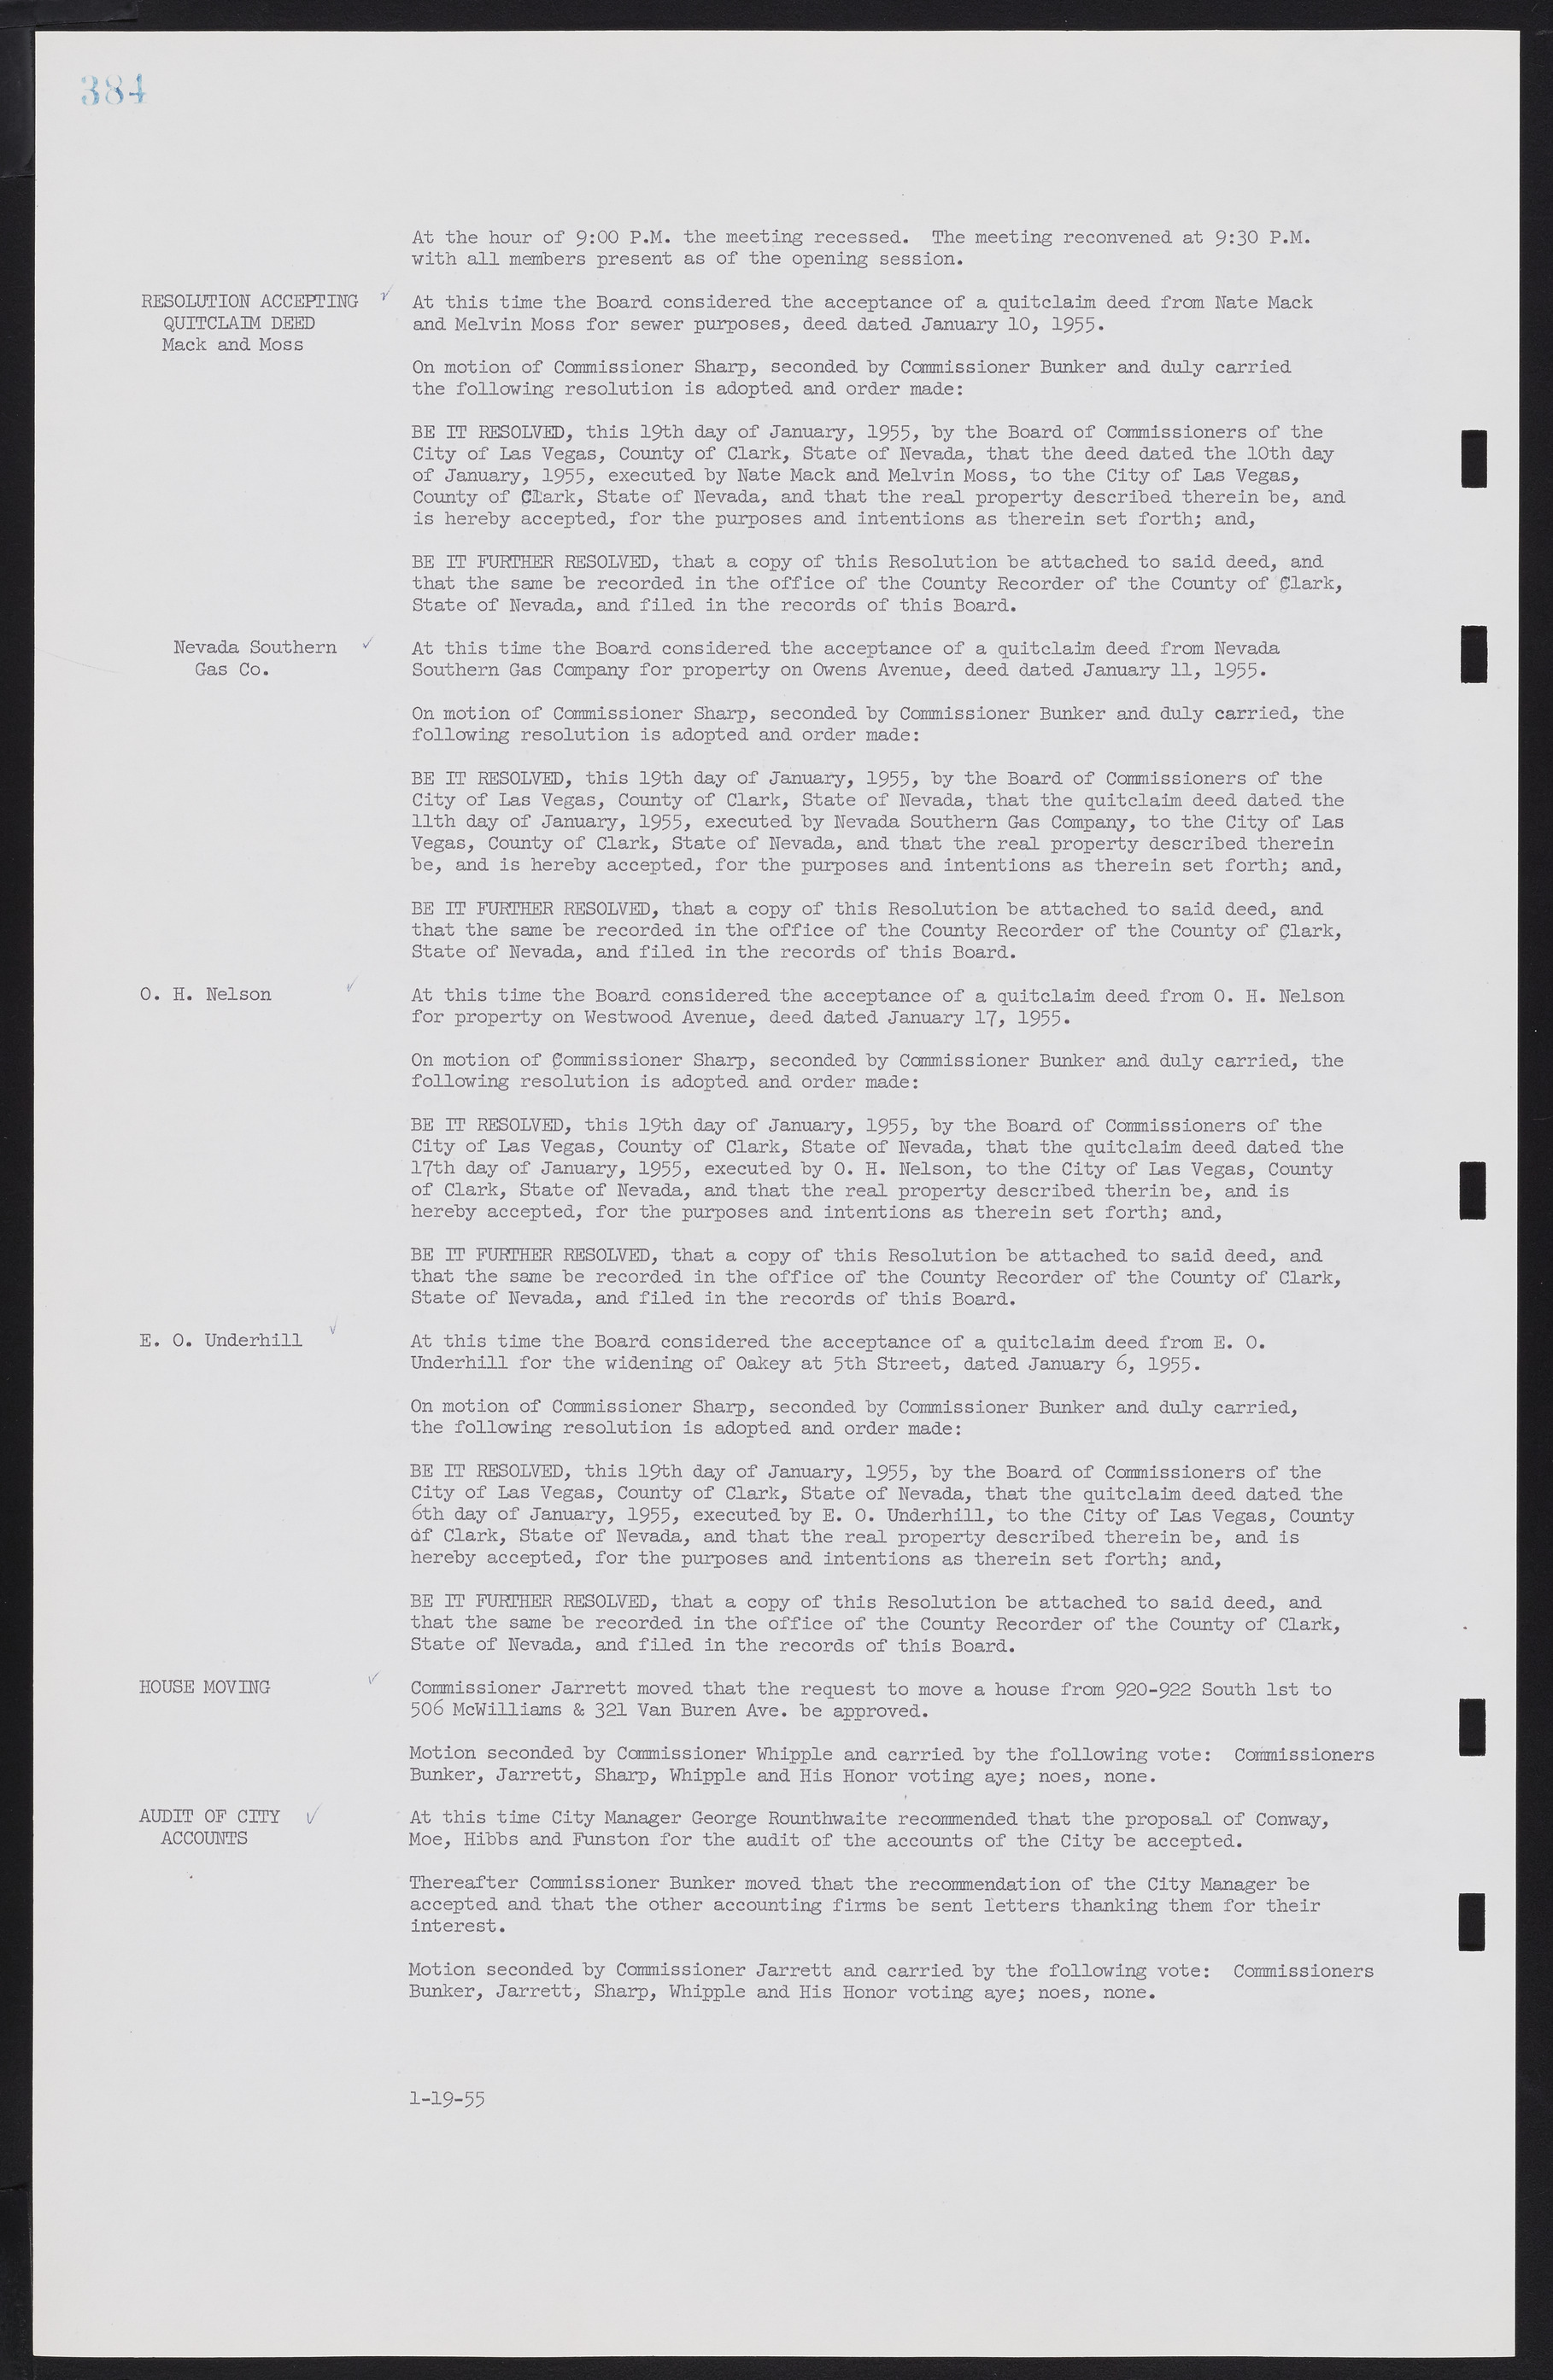 Las Vegas City Commission Minutes, February 17, 1954 to September 21, 1955, lvc000009-390